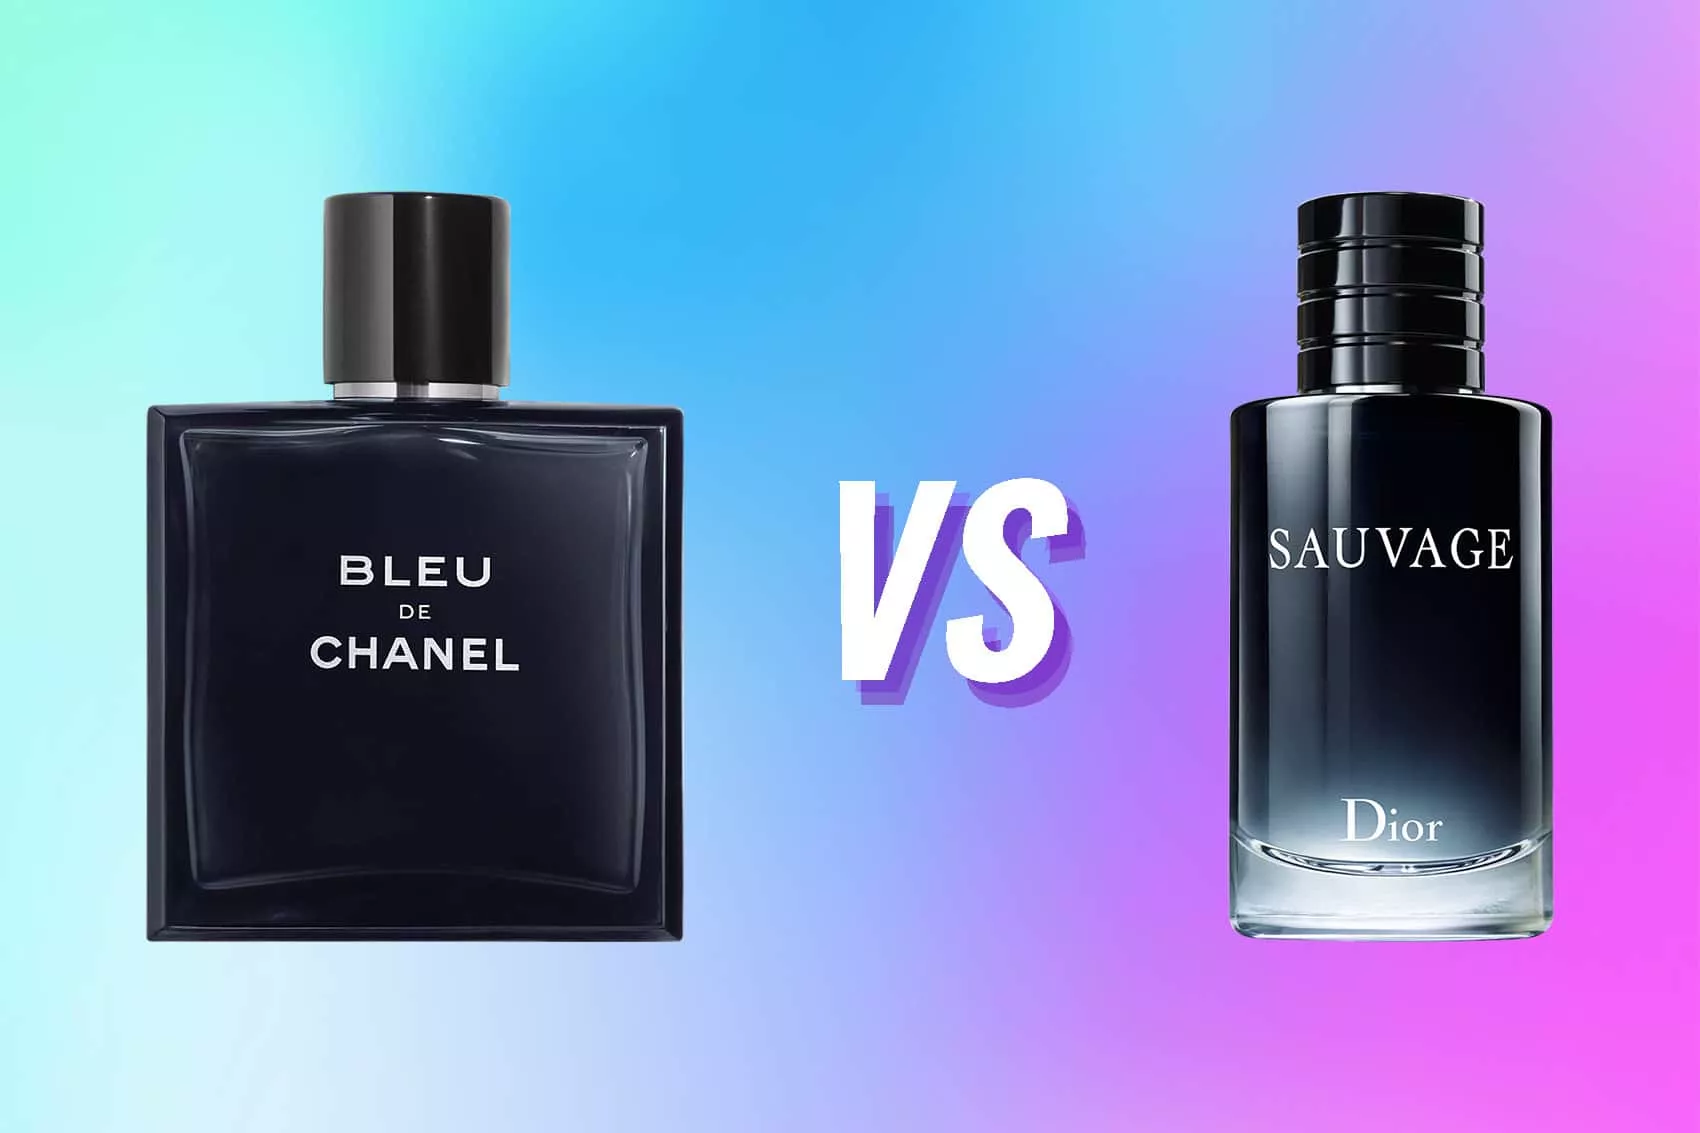 Bleu de Chanel vs Dior Sauvage